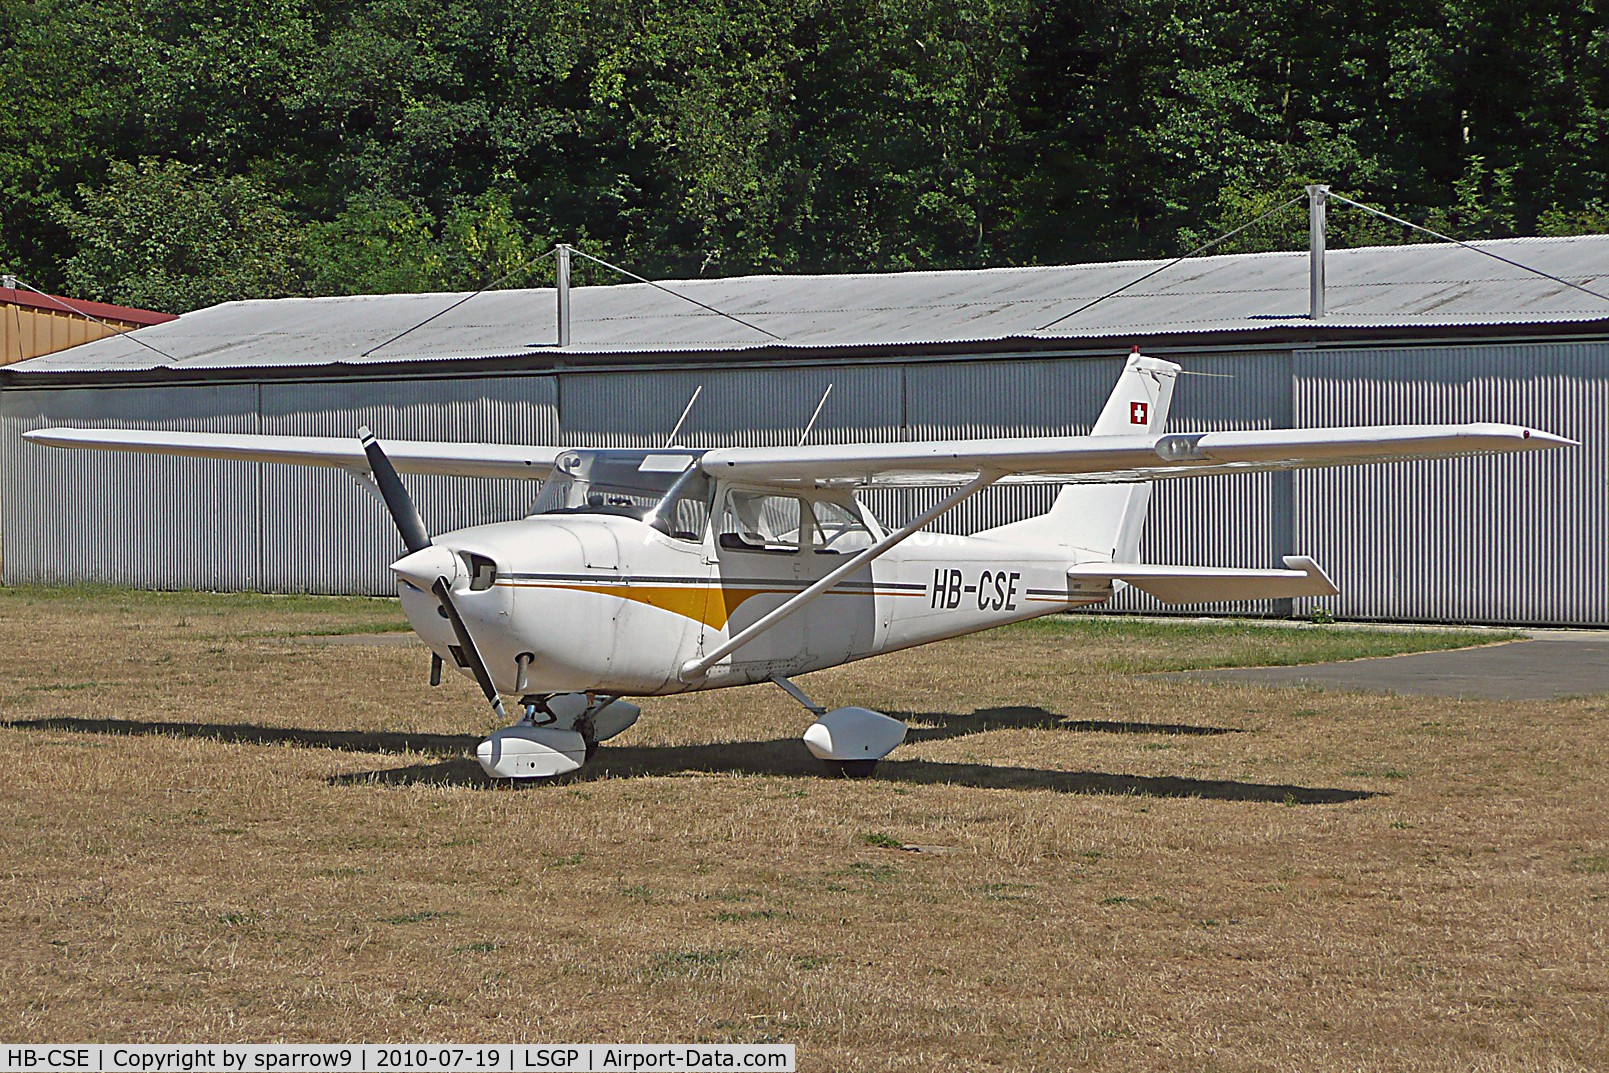 HB-CSE, 1967 Reims F172H Skyhawk C/N 0329, A warm summer afternoon